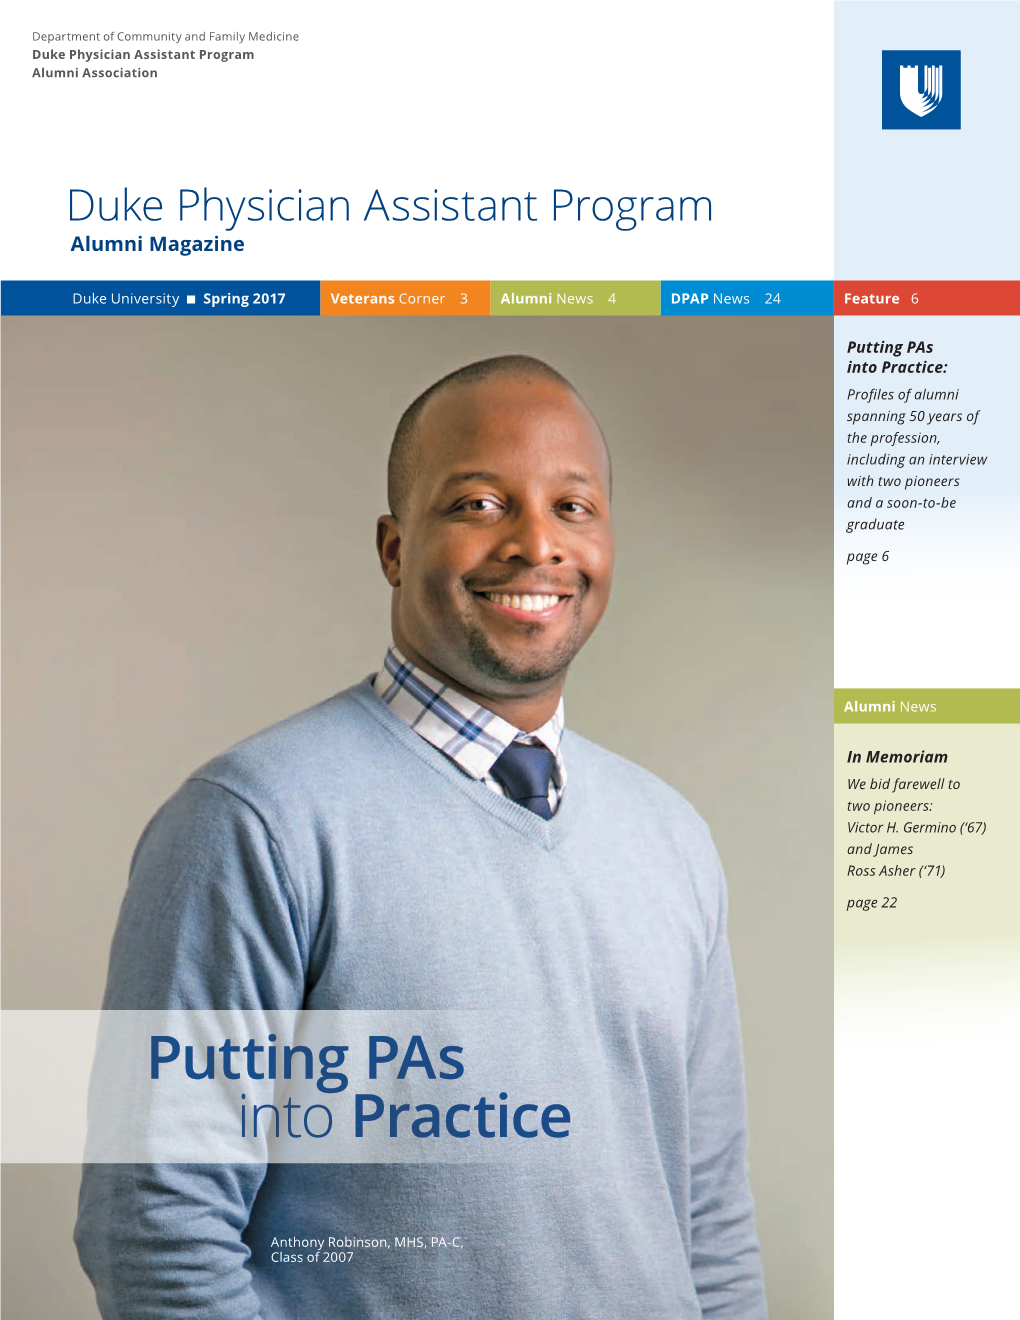 Duke Physician Assistant Program Alumni Association